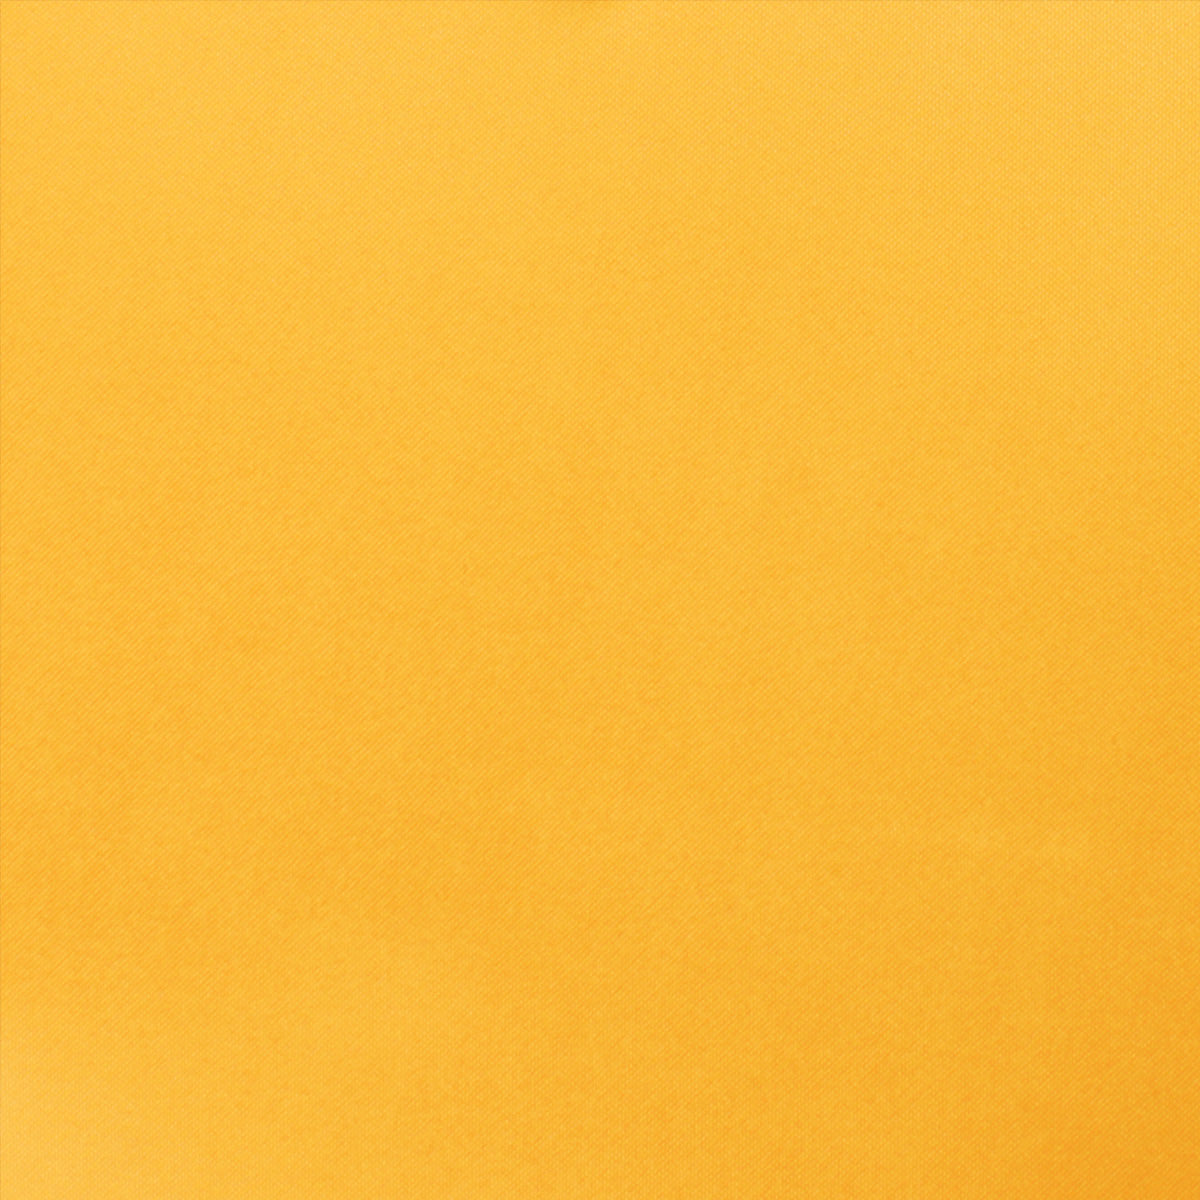 Honey Gold Yellow Satin Fabric Swatch